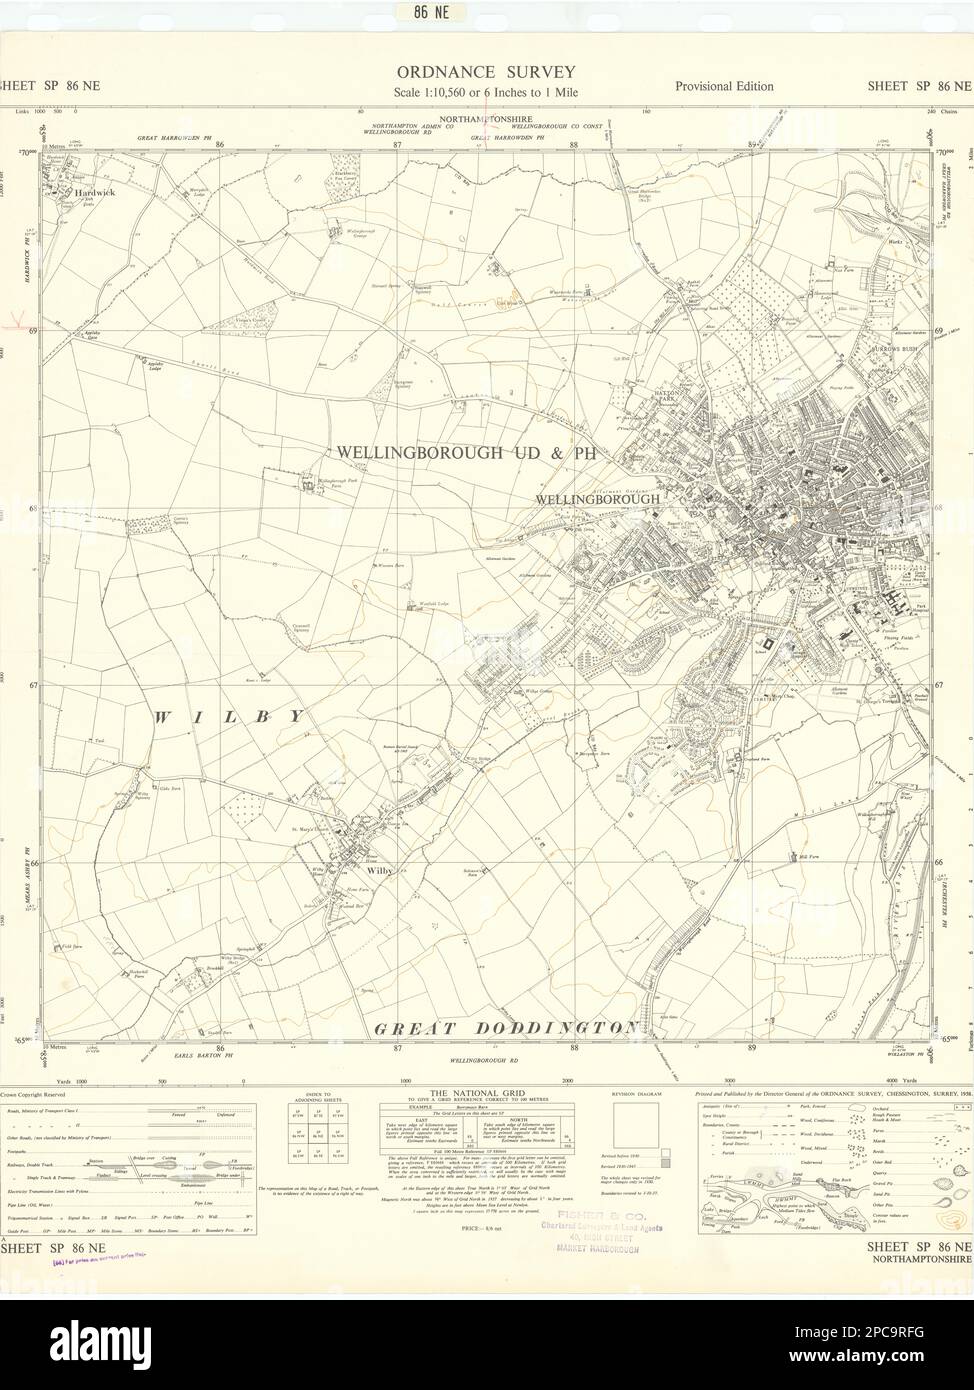 Ordnance Survey SP86NE Northamptonshire Wellingborough Hardwick Wilby 1958 mapa Foto de stock